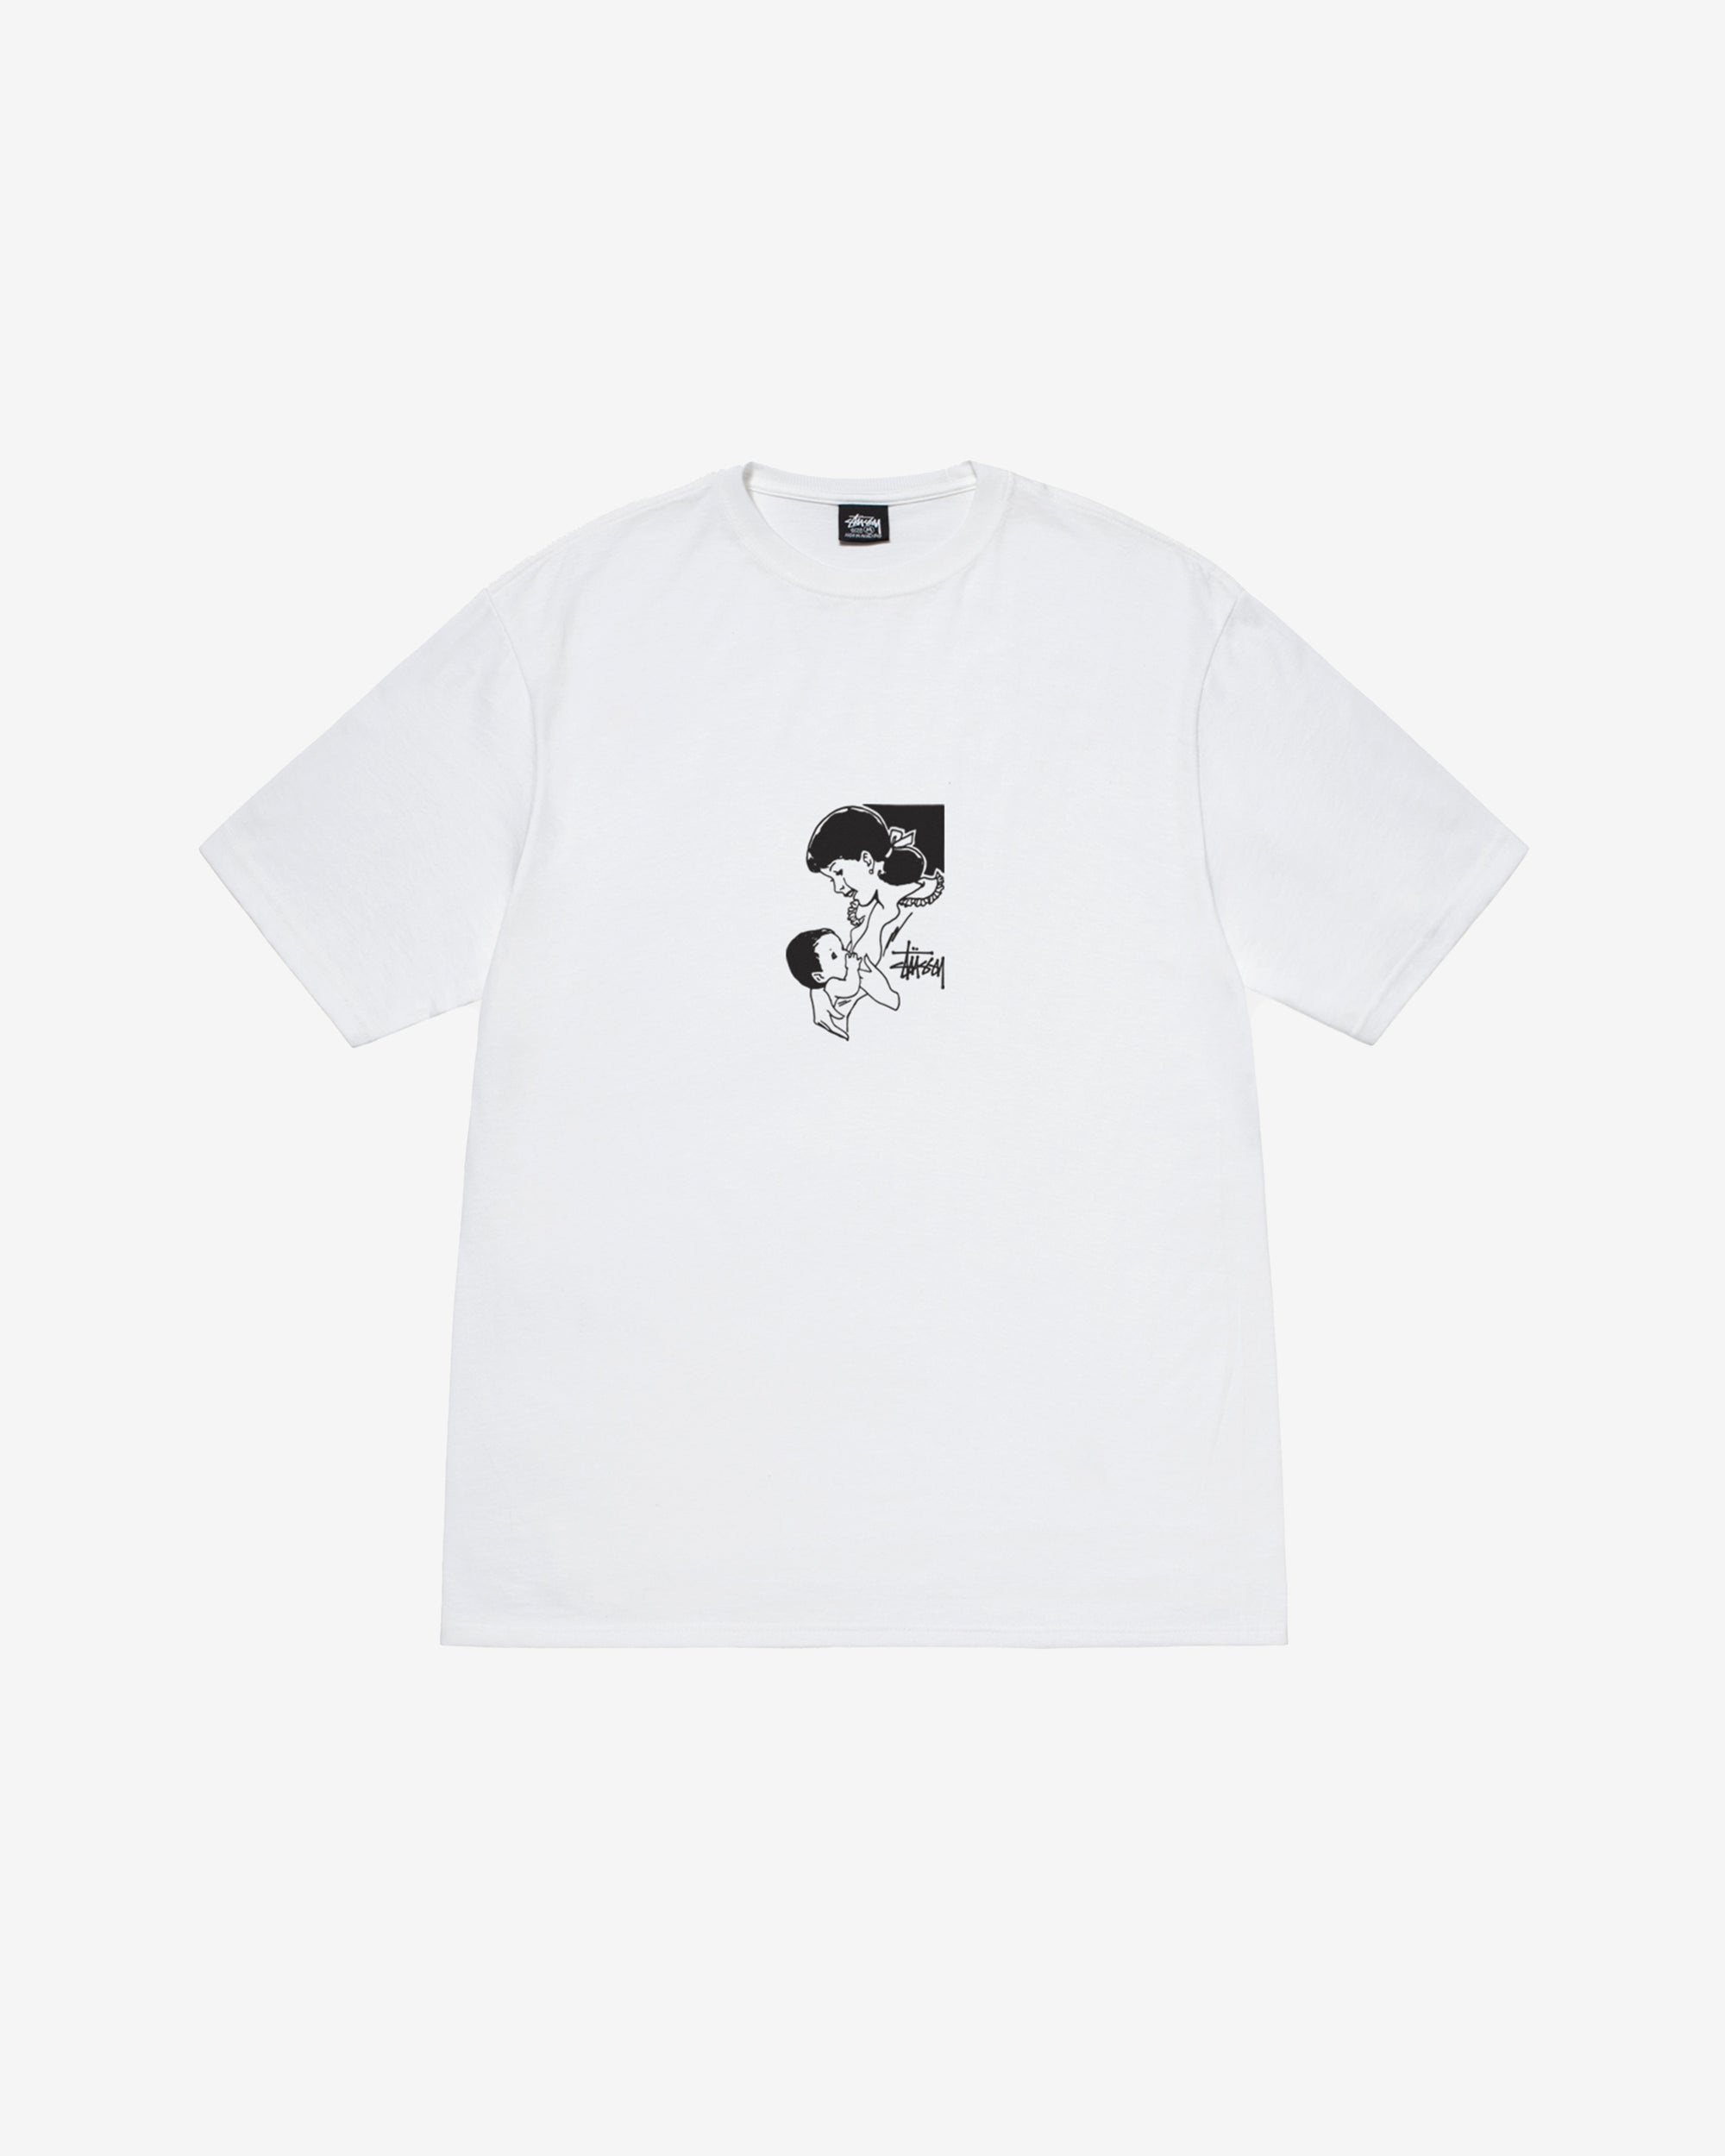 Stüssy - Men's Nurture T-Shirt - (White) – DSMNY E-SHOP